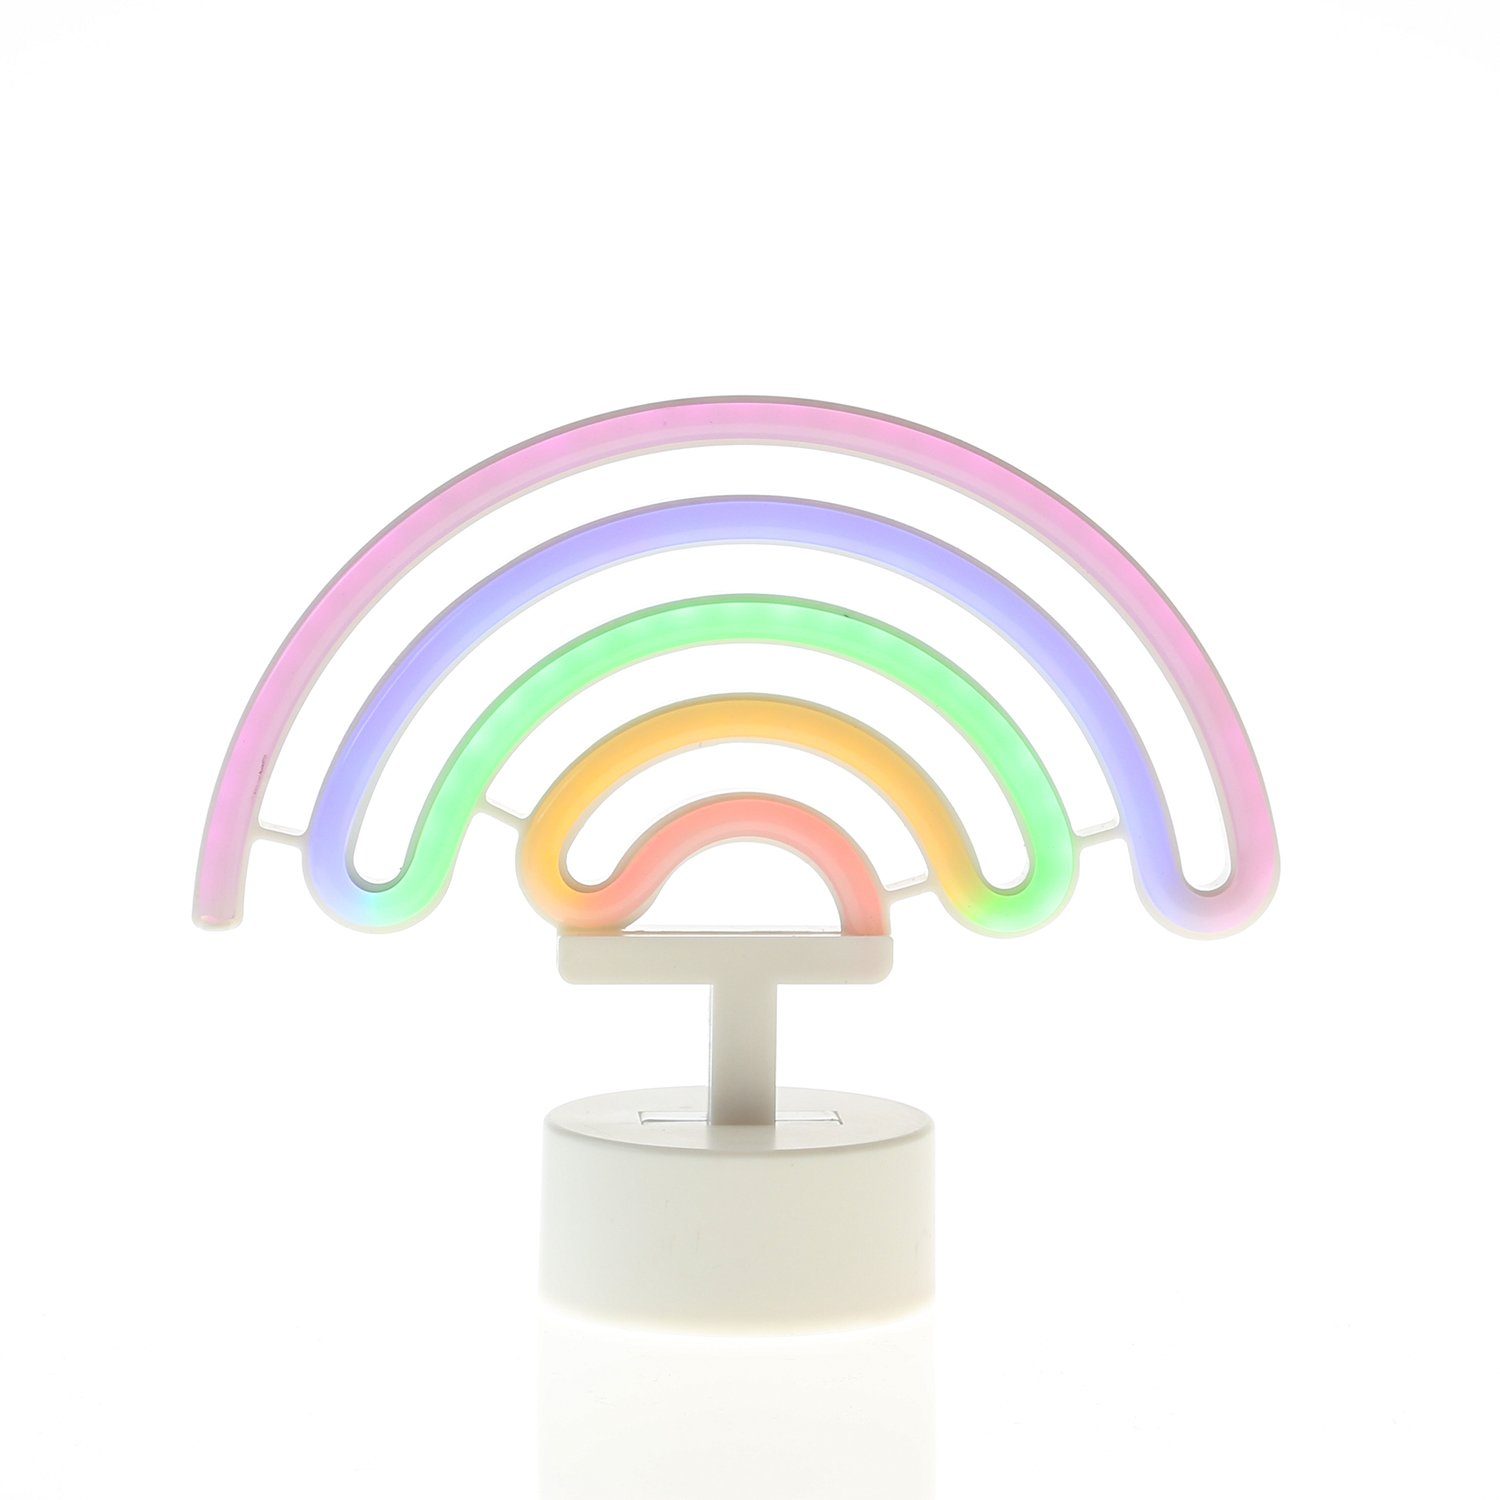 SATISFIRE LED Dekolicht 19cm LED / mehrfarbig bunt Batterie USB bunt, LED Neonlicht Neonschild Classic, Regenbogen Leuchtfigur